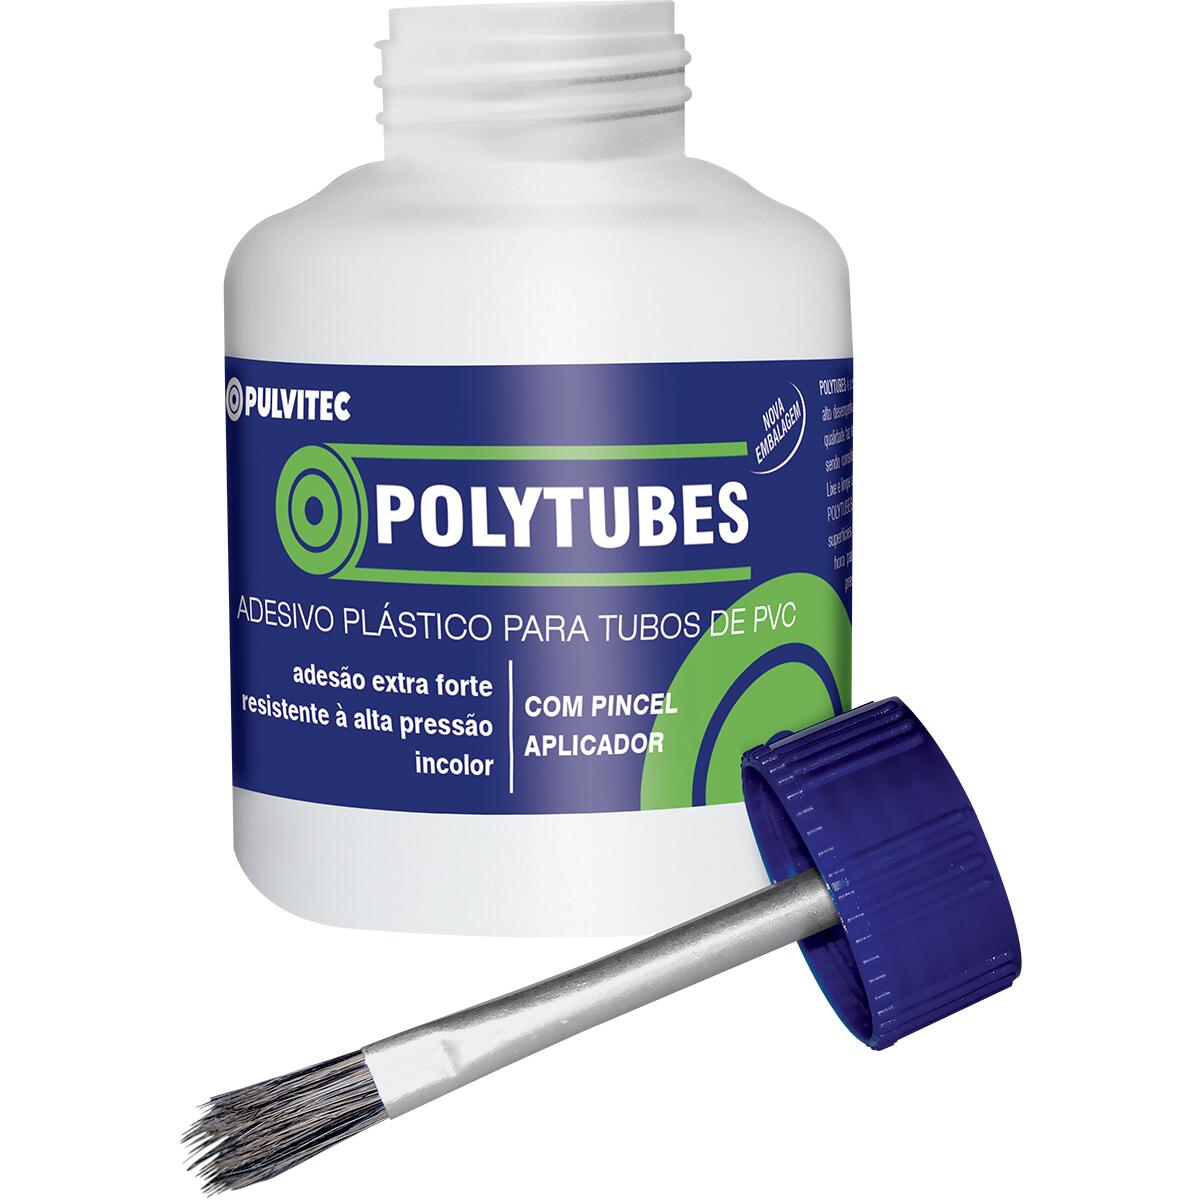 Adesivo para Tubos de Pvc Rígido Polytubes com Pincel 175G Pulvitec